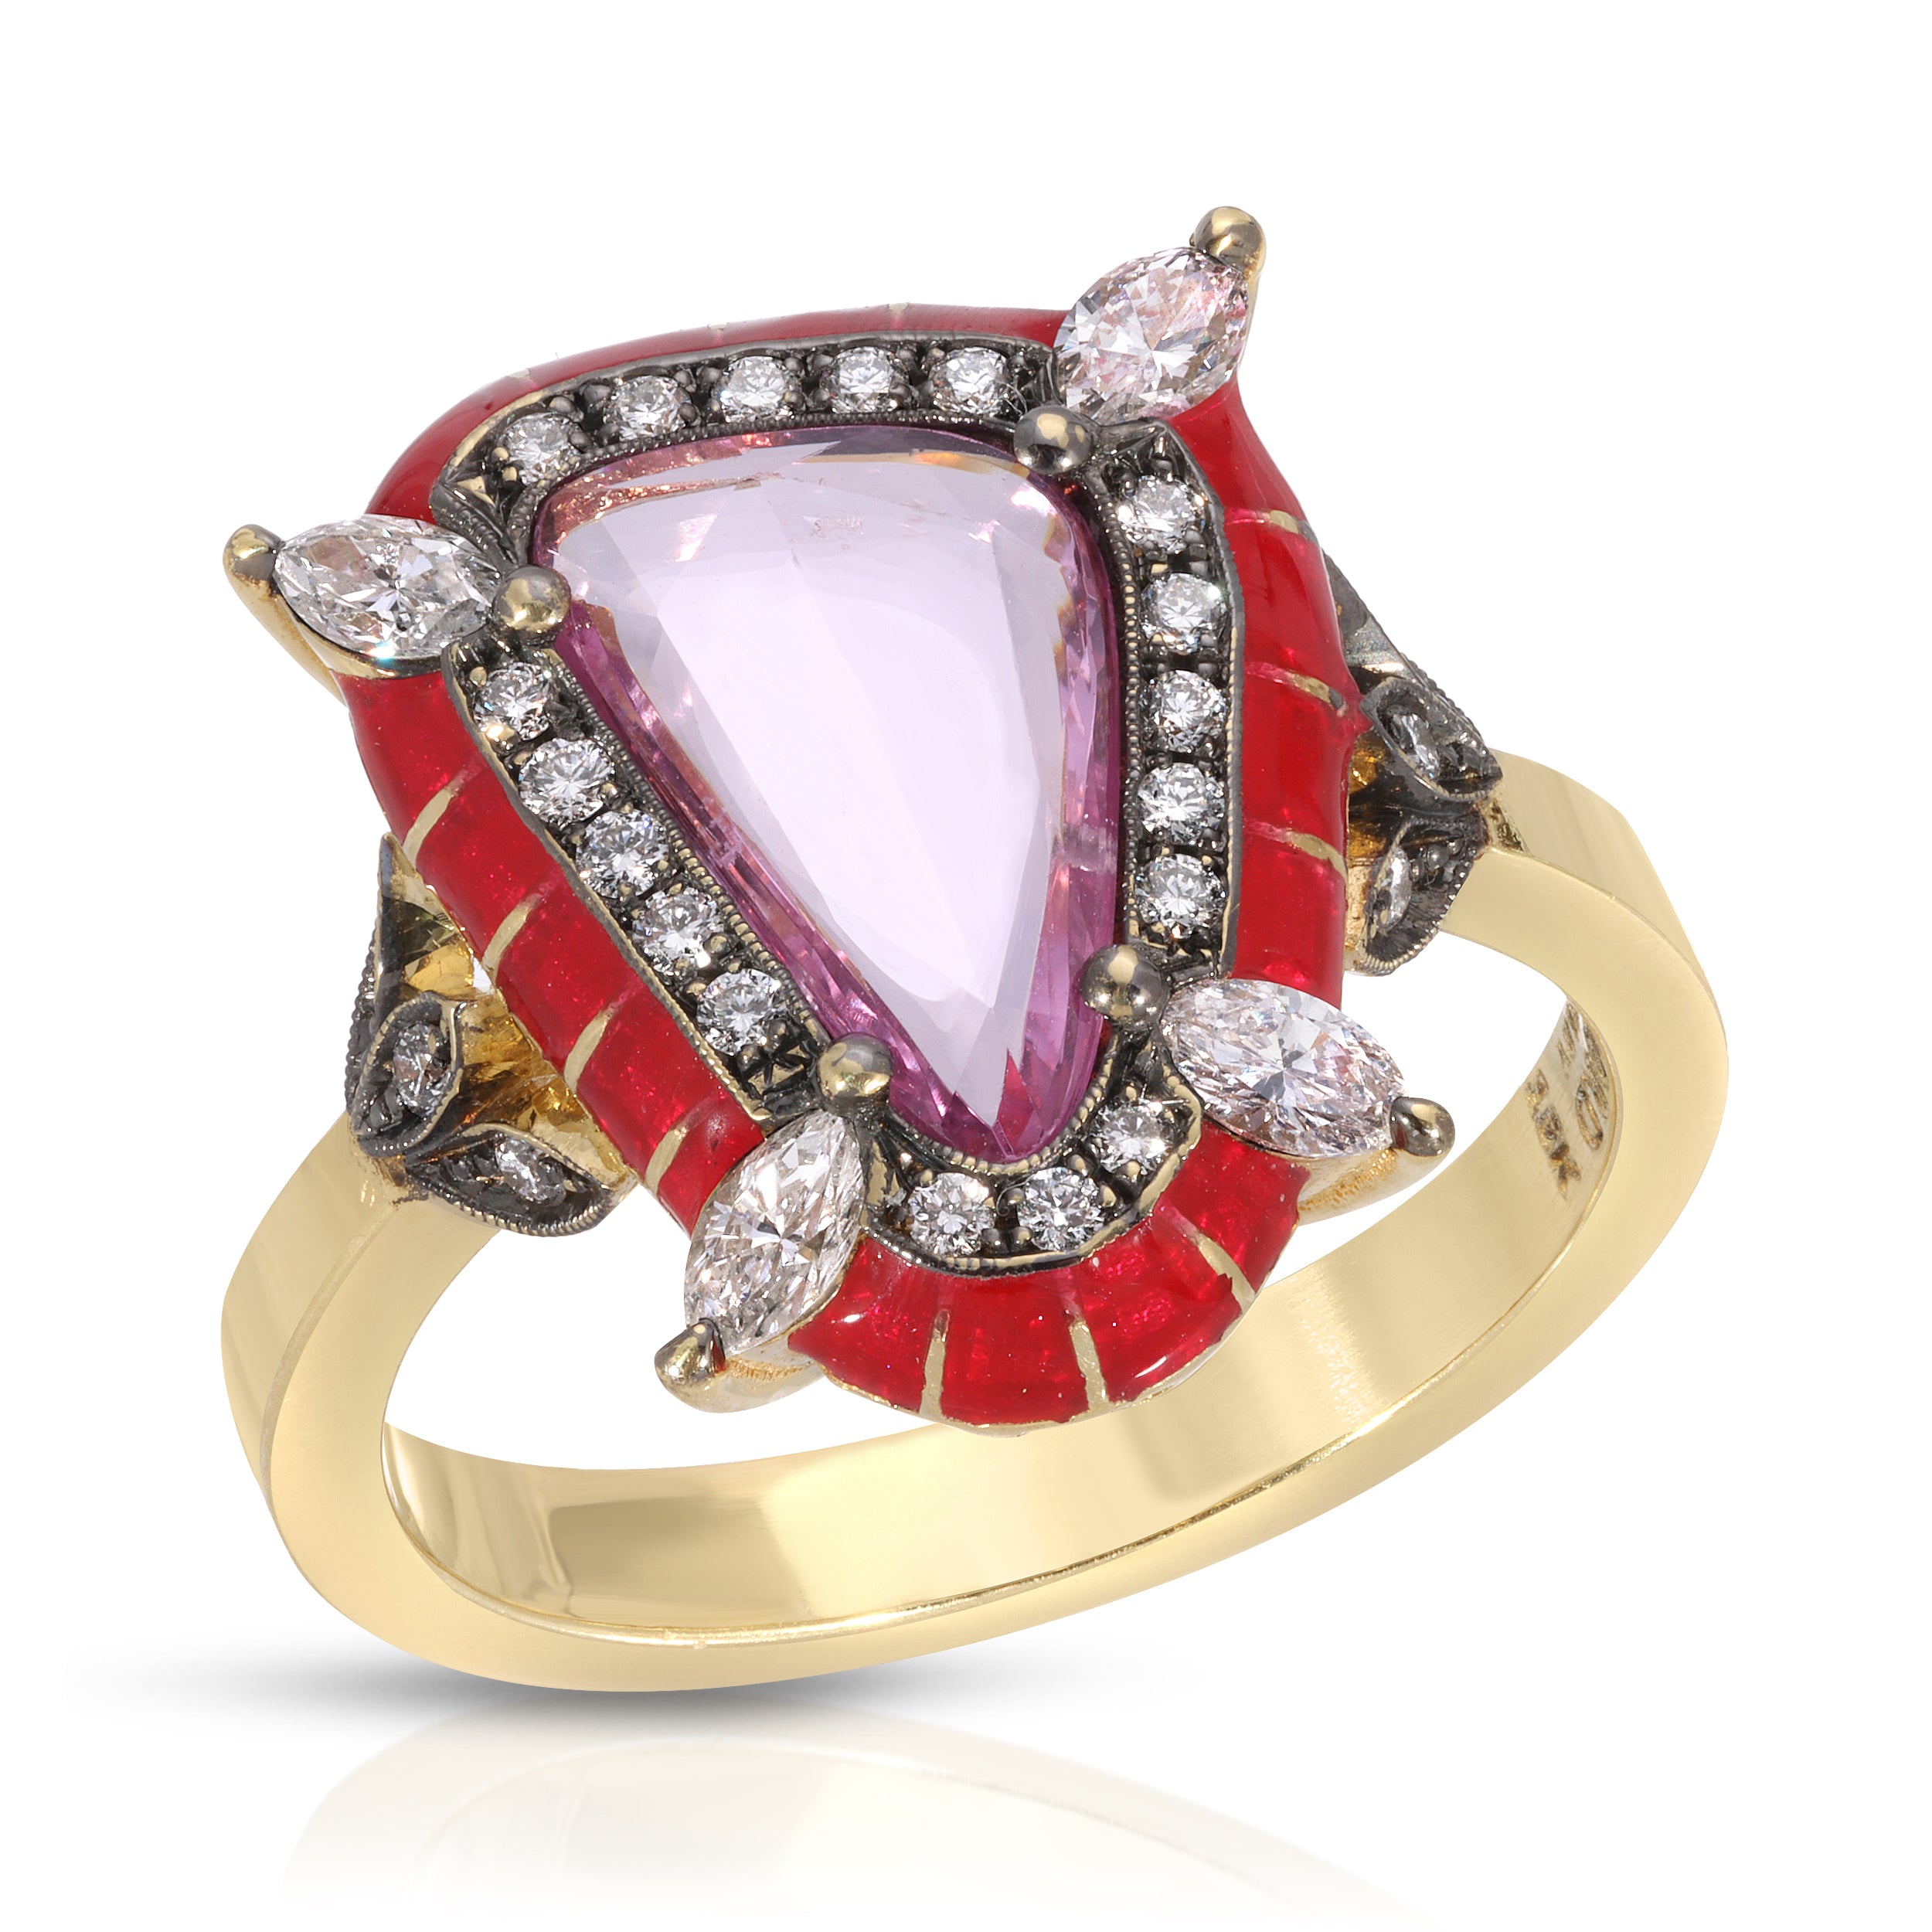 Princess-Cut Diamond Ring on Rock Candy